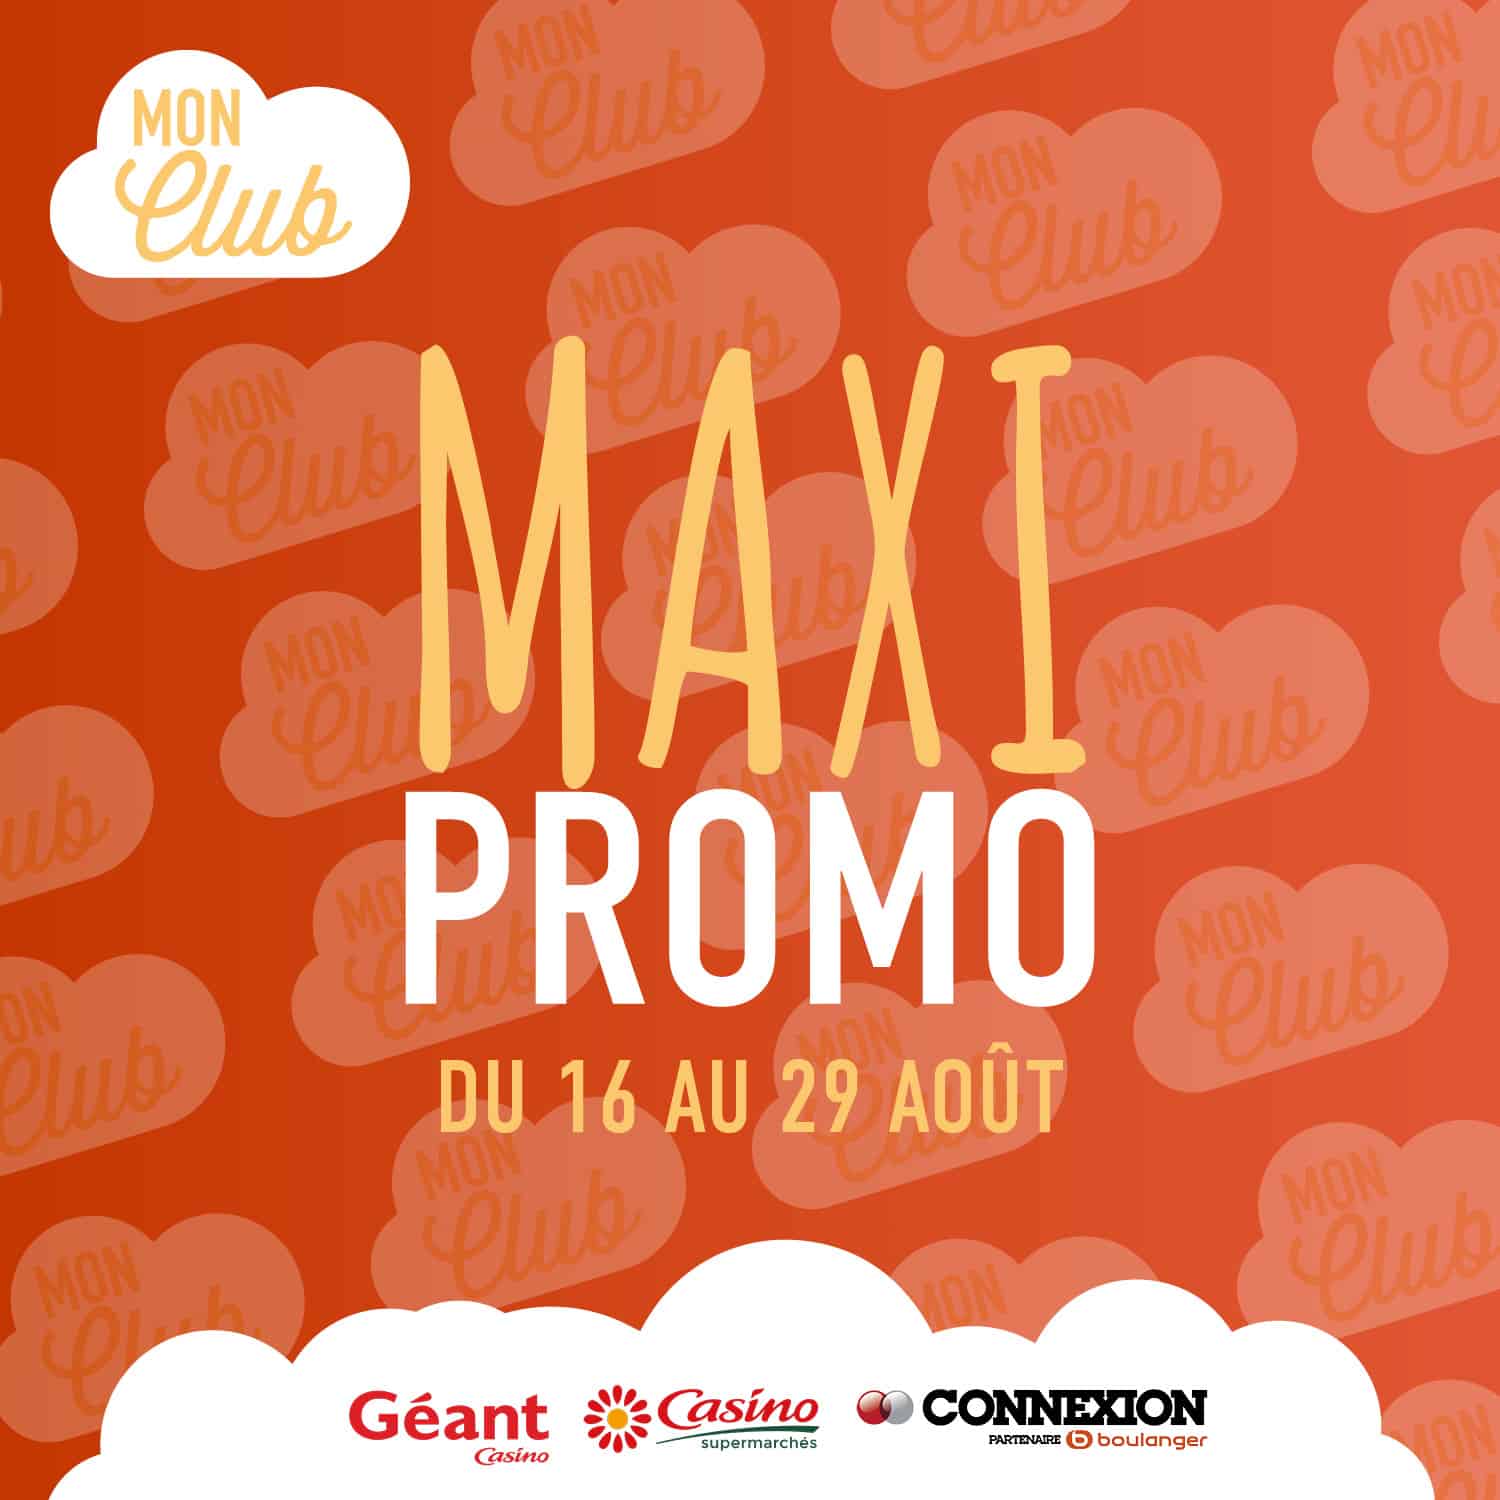 Les Maxi Promo – Le retour